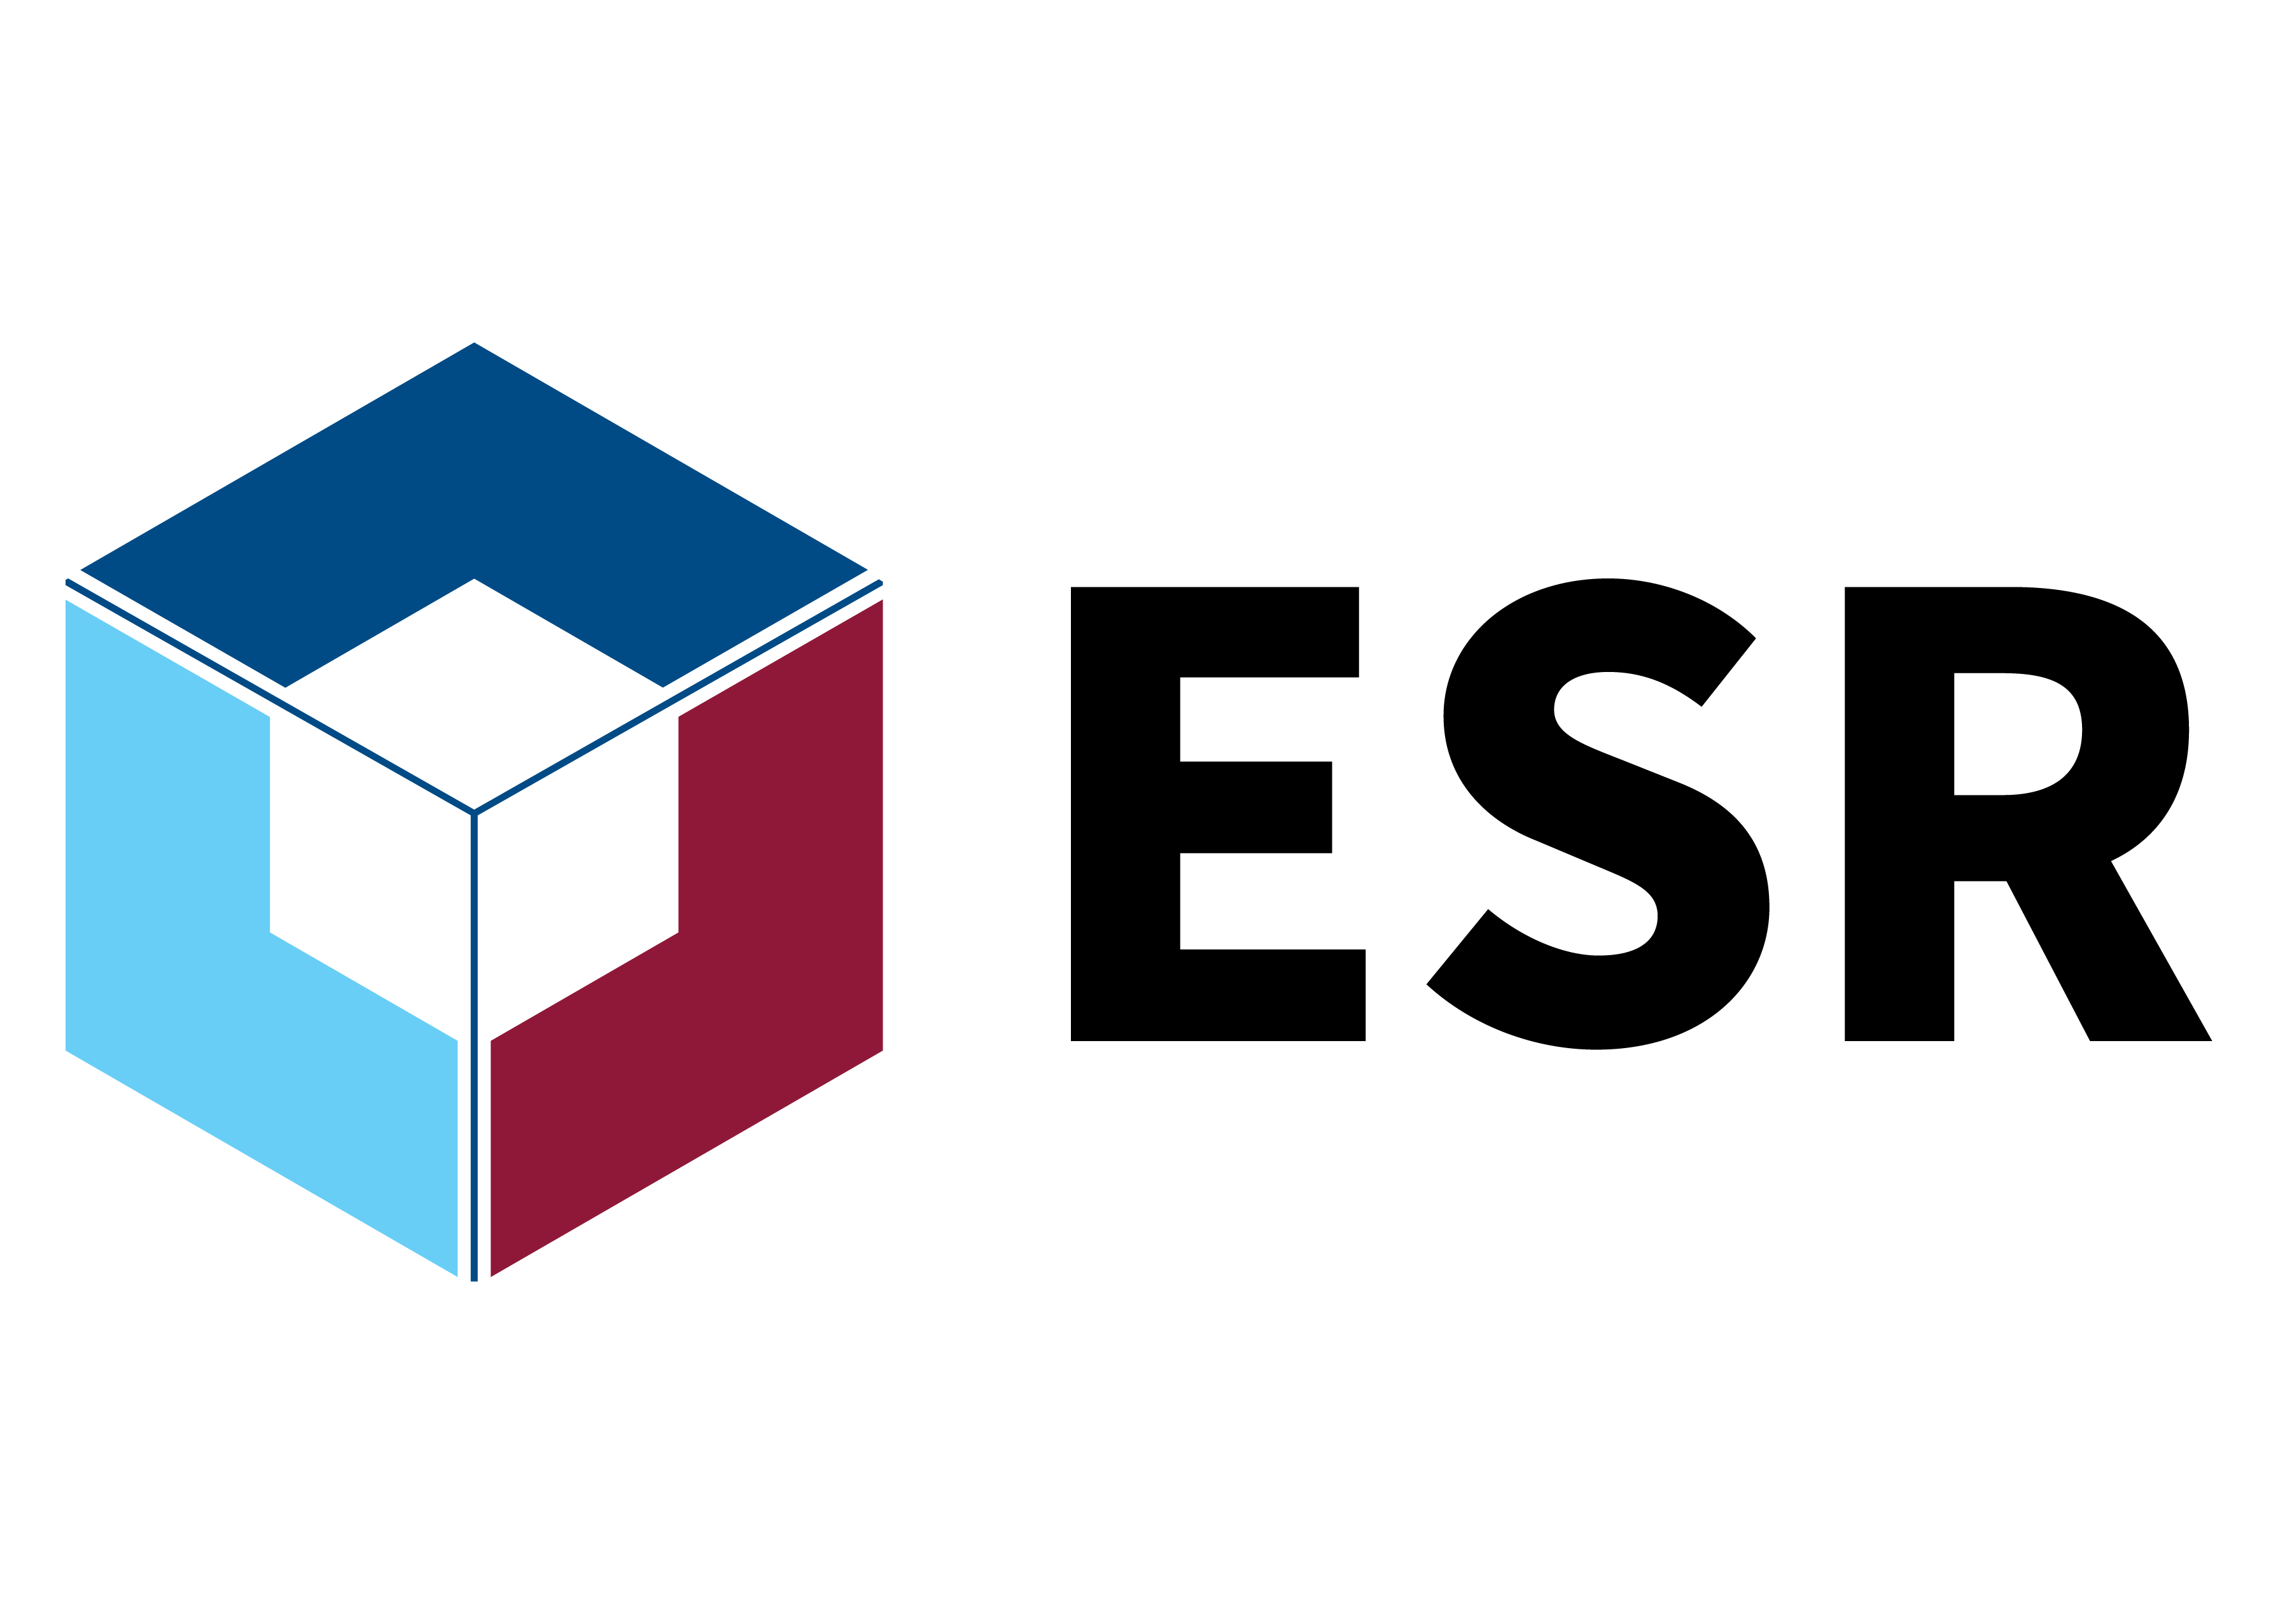 ESR Logo